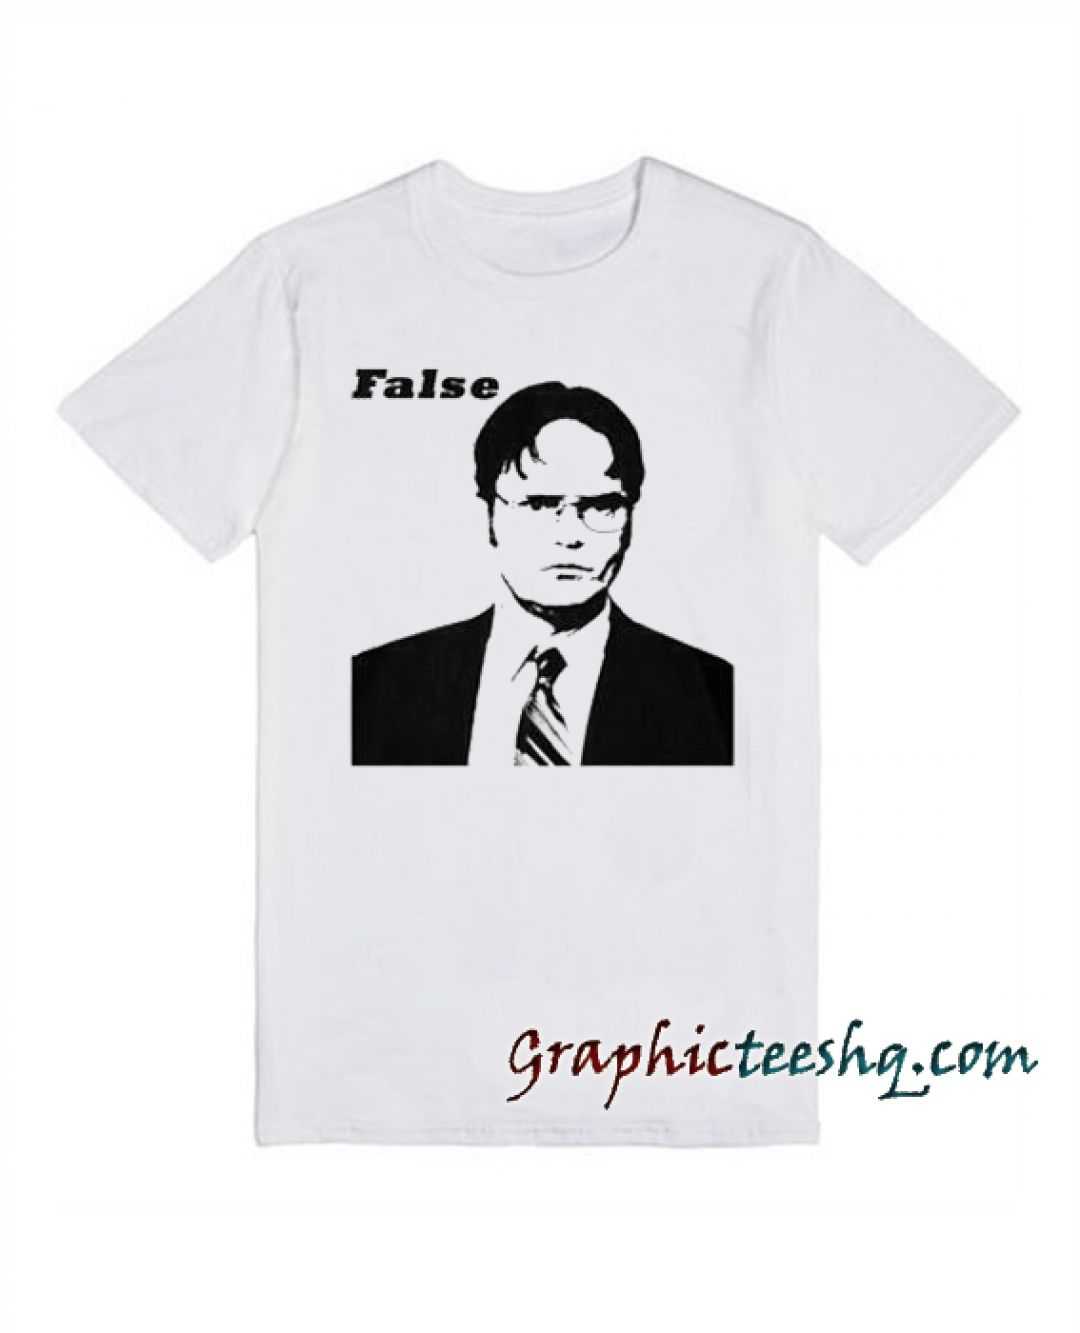 Dwight Schrute False Unisex tee shirt for adult men and women.